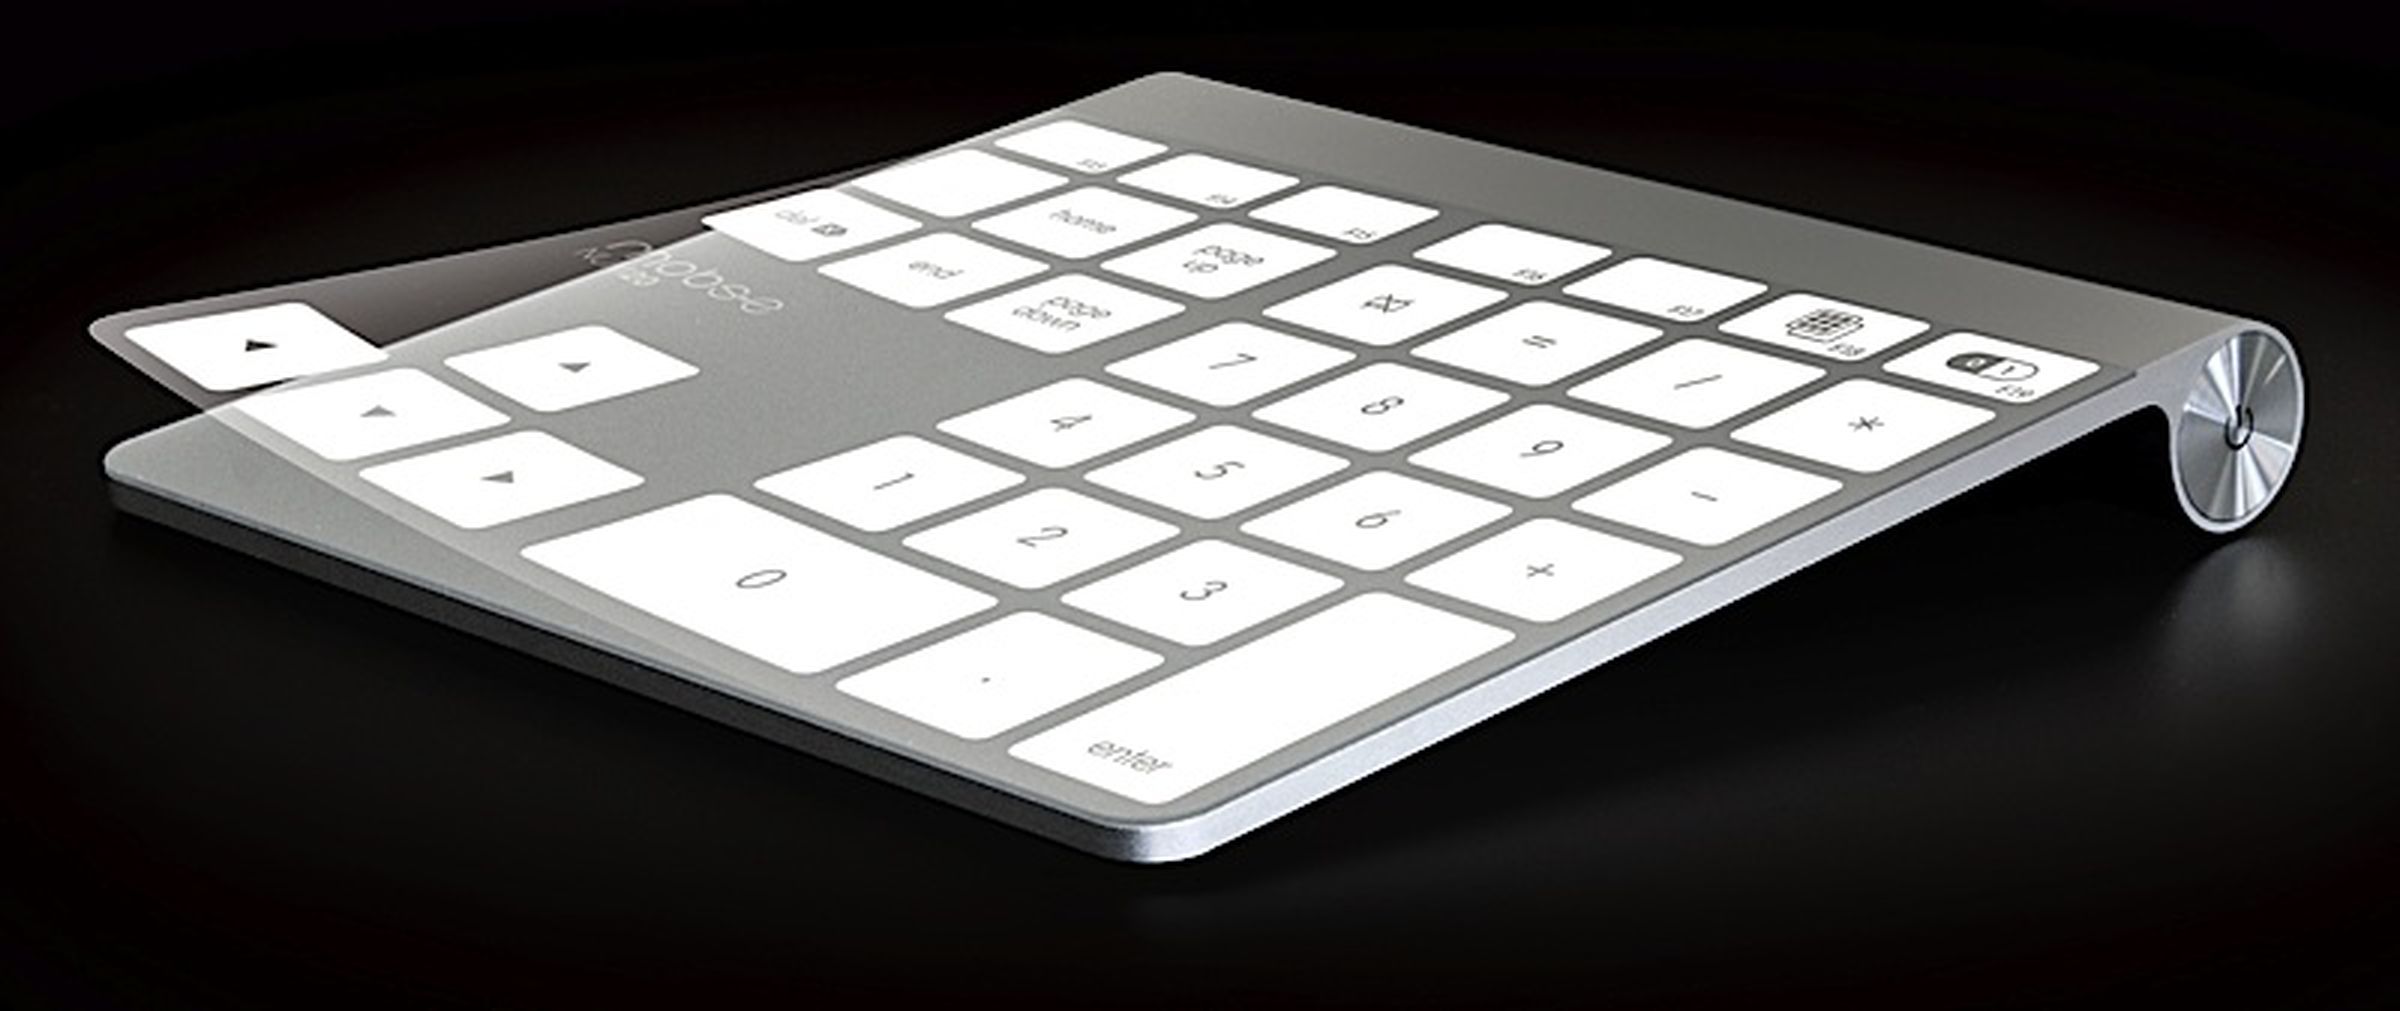 Mobee Magic Numpad turns Apple’s TrackPad into a temporary numeric keypad